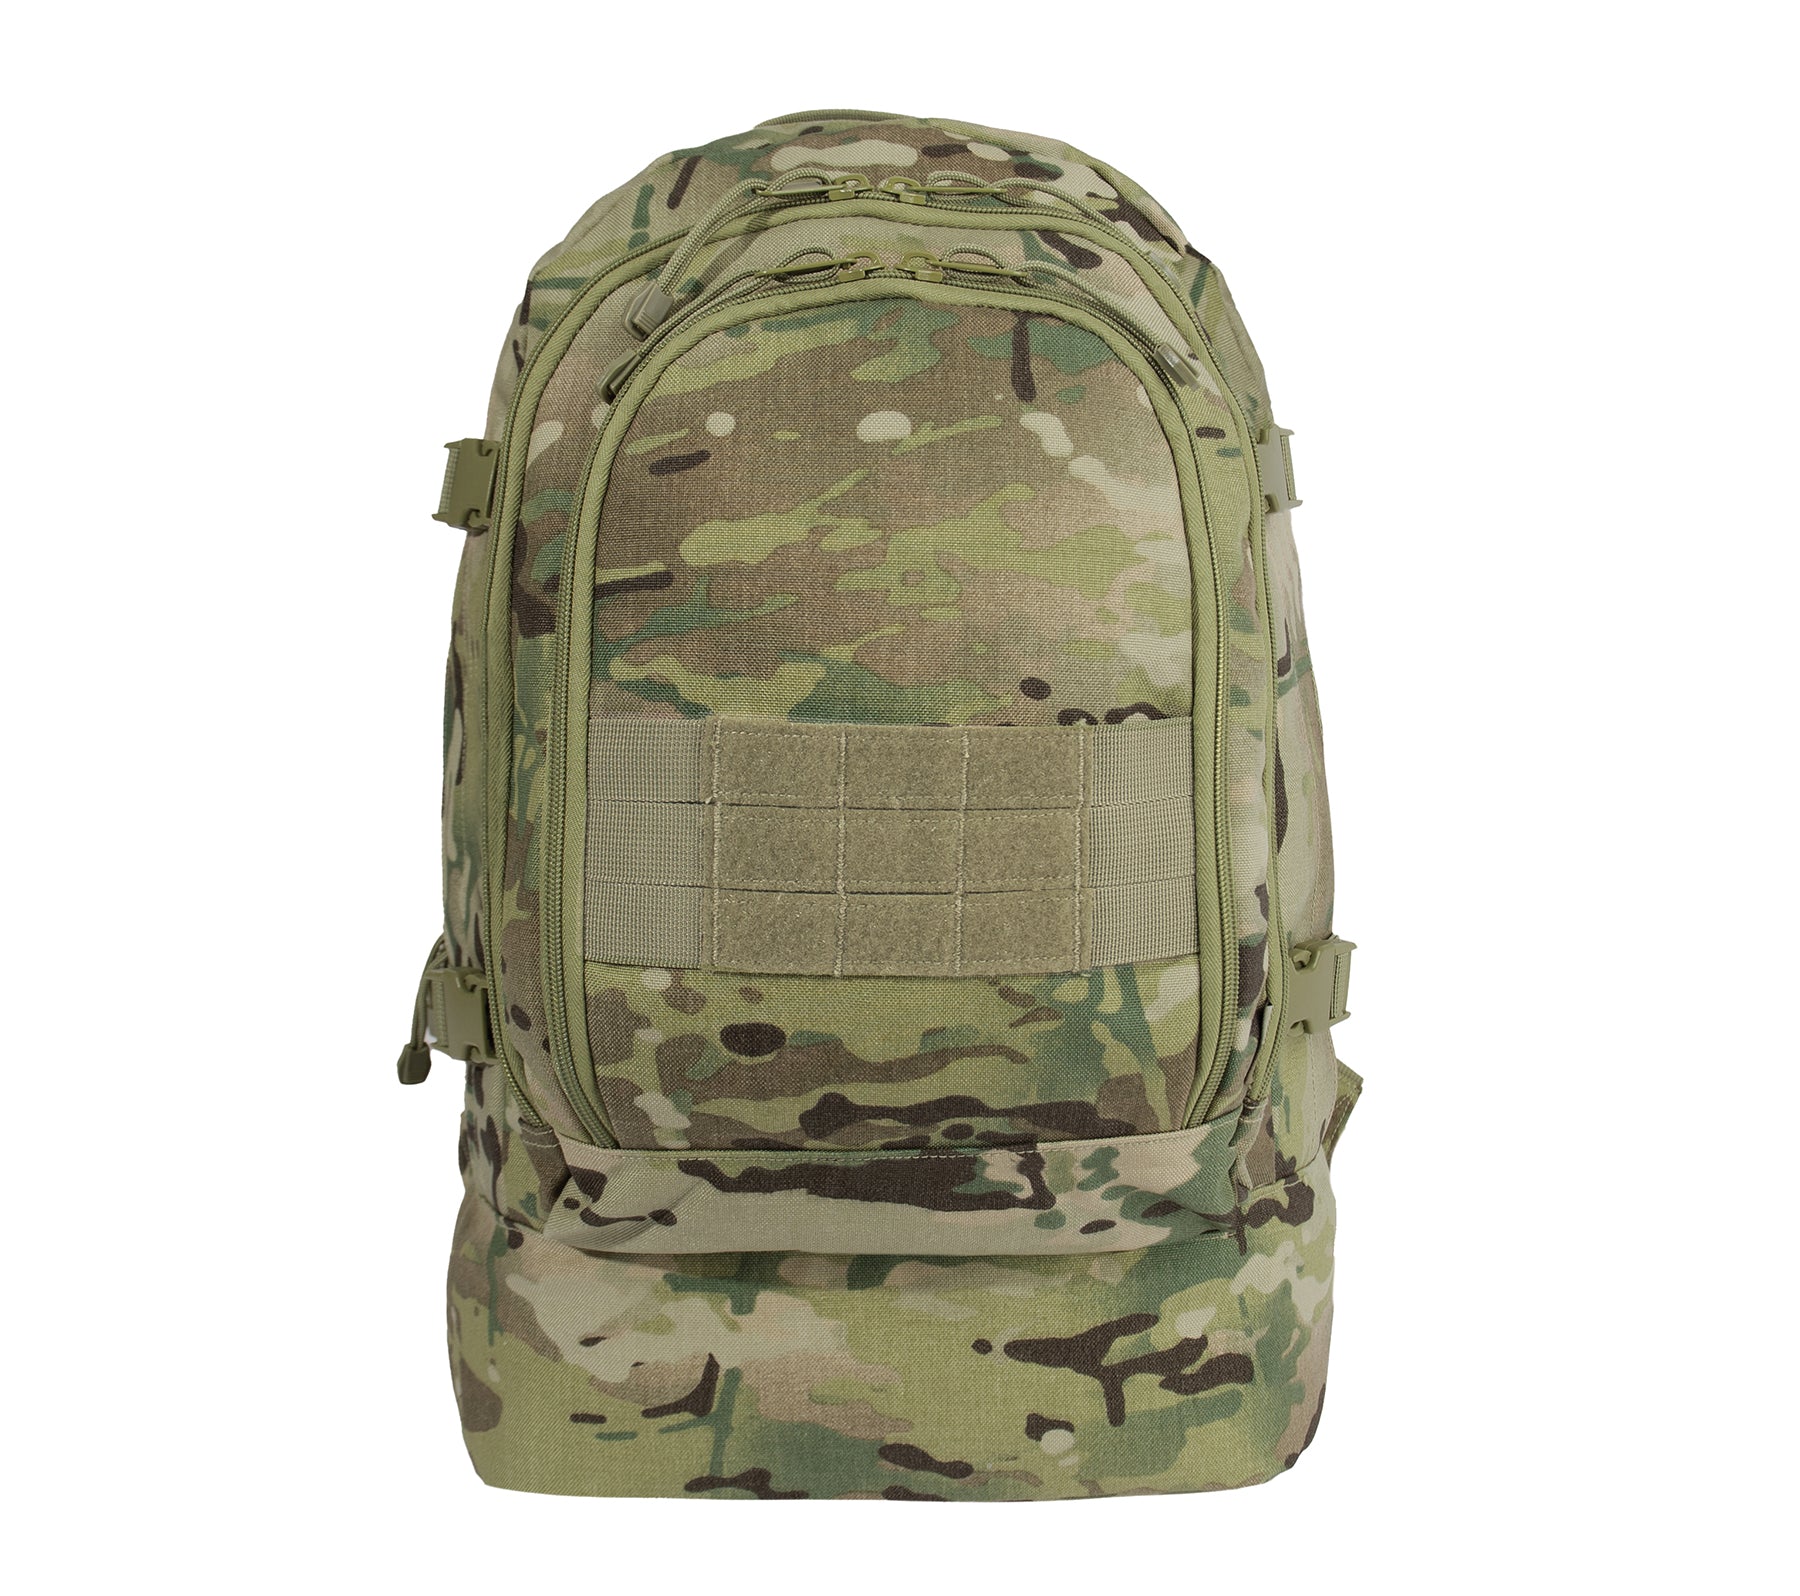 Milspec Skirmish 3 Day Assault Backpack Tactical Packs MilTac Tactical Military Outdoor Gear Australia